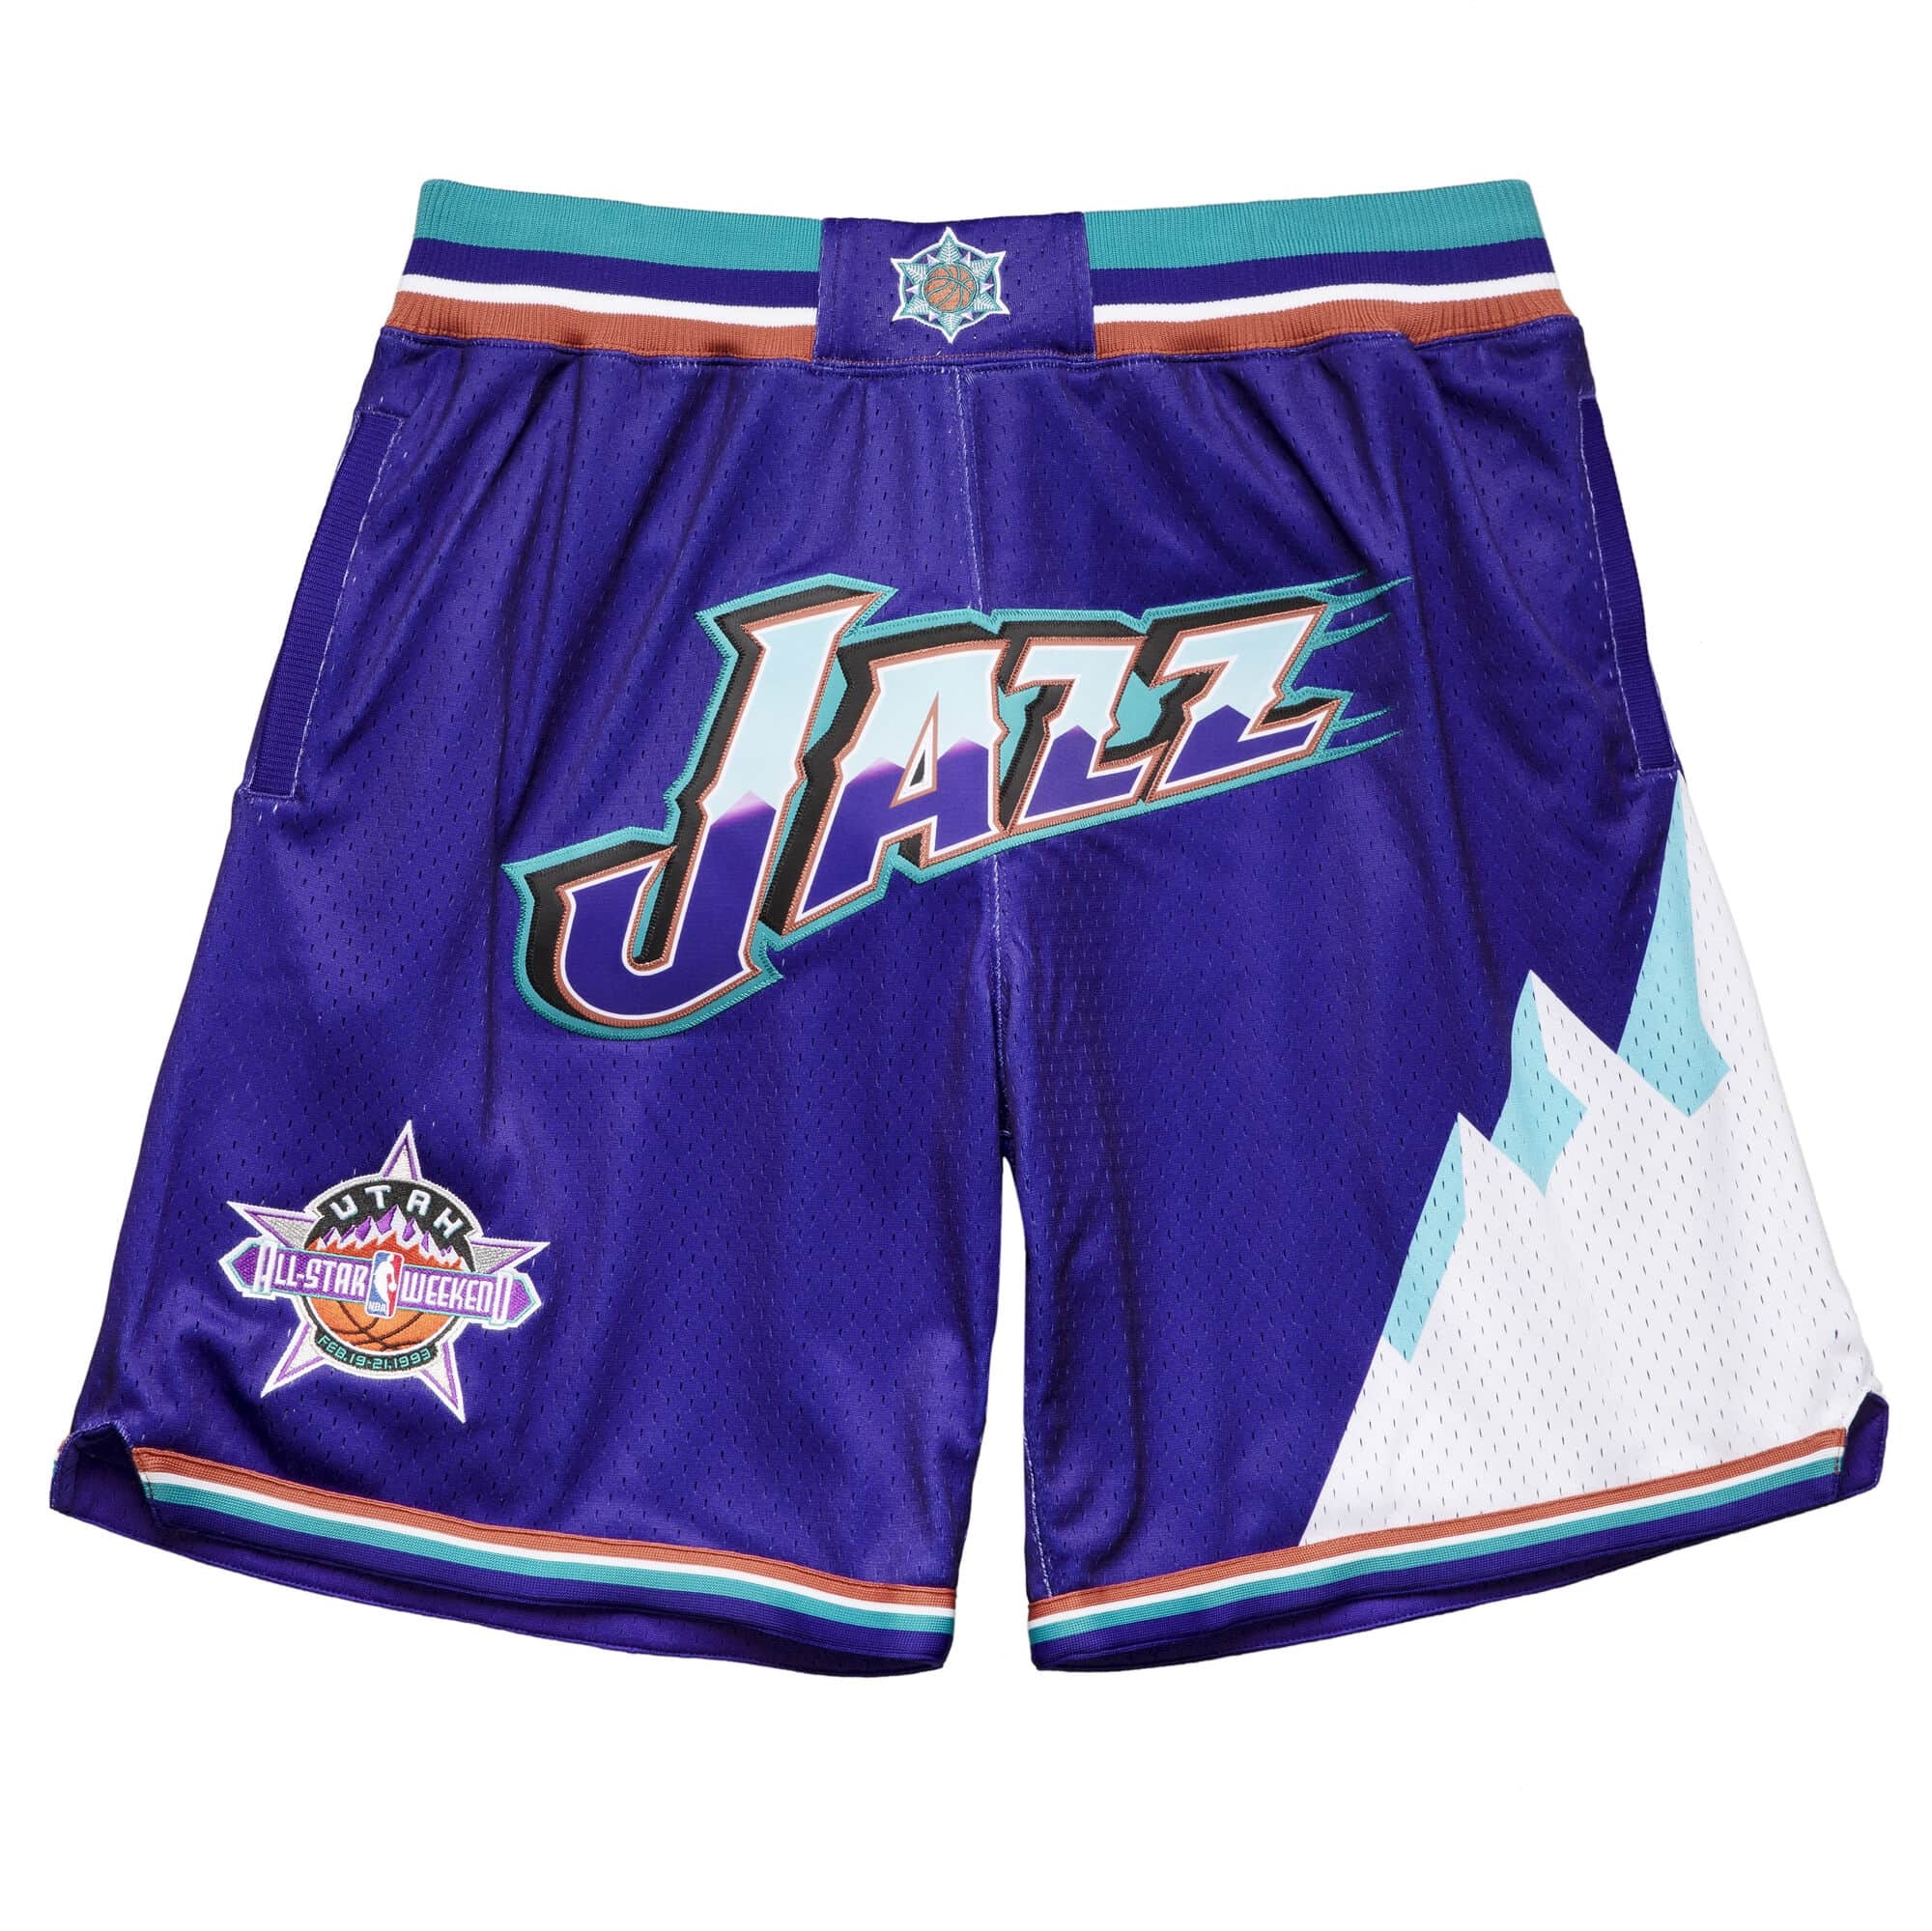 all star 1996 shorts